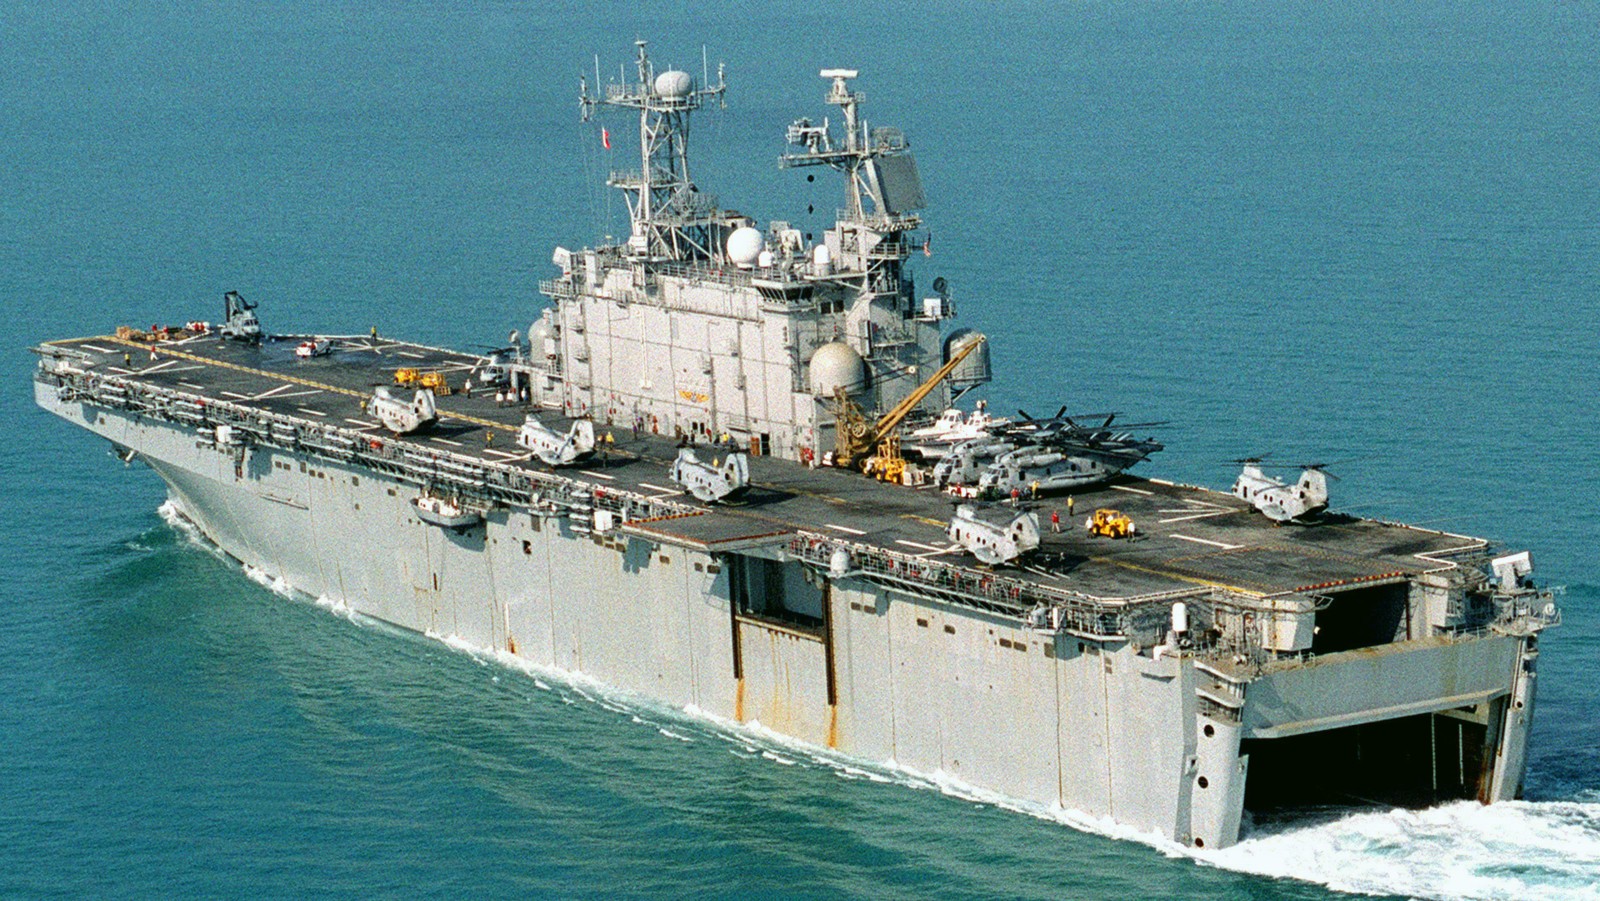 lha-1 uss tarawa amphibious assault ship us navy ingalls shipbuilding pascagoula hmm squadron meu marines 02x